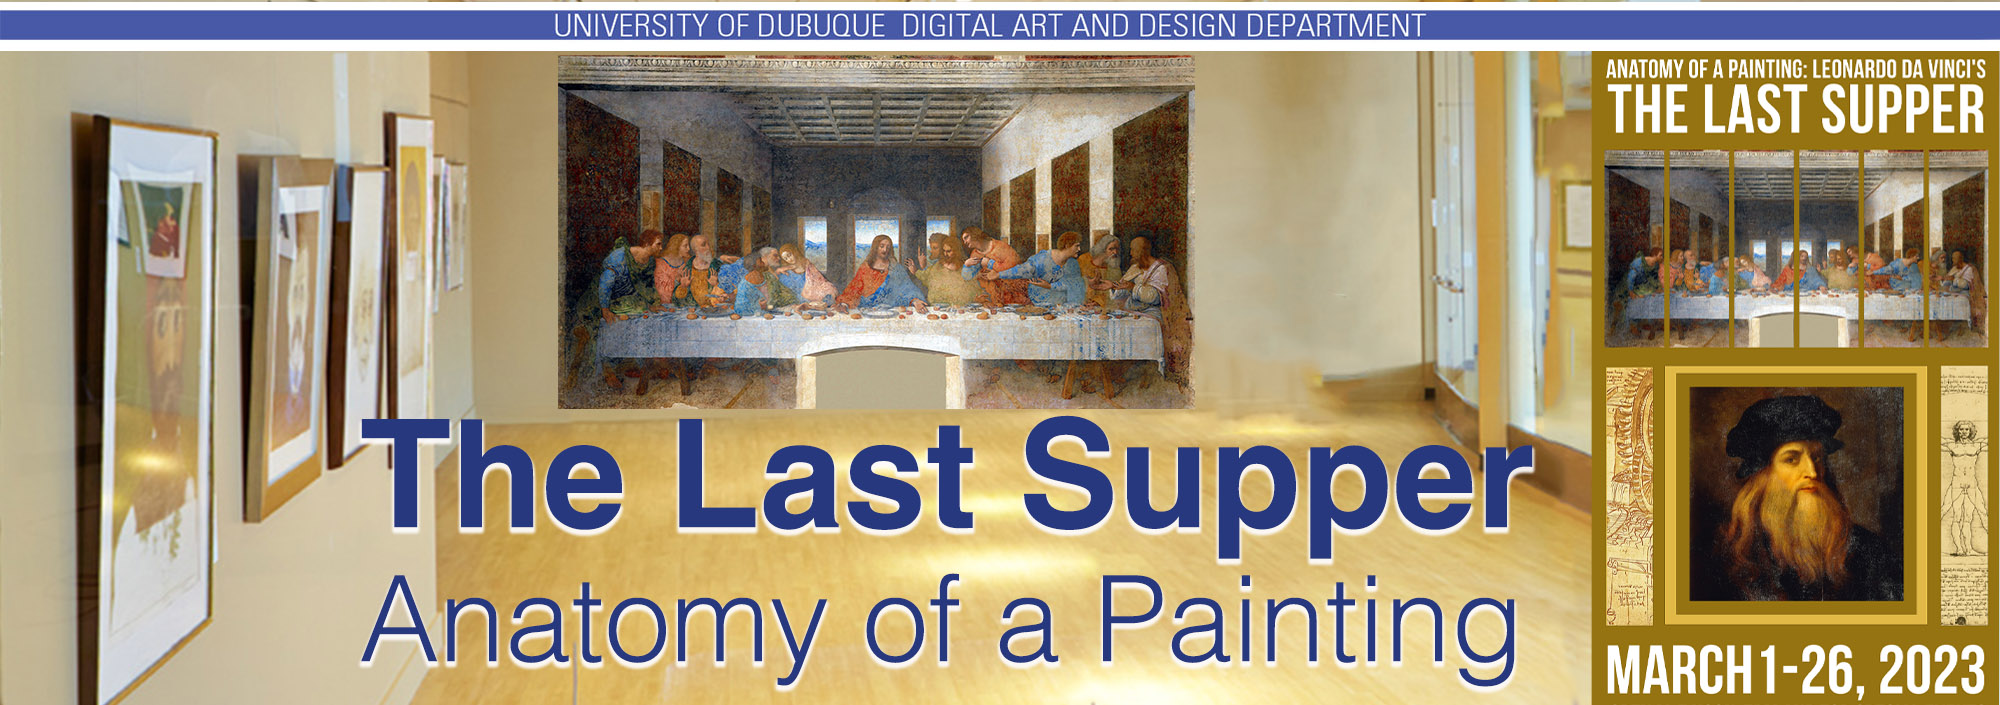 Anatomy of a Painting: Leonardo Da Vinci's The Last Supper